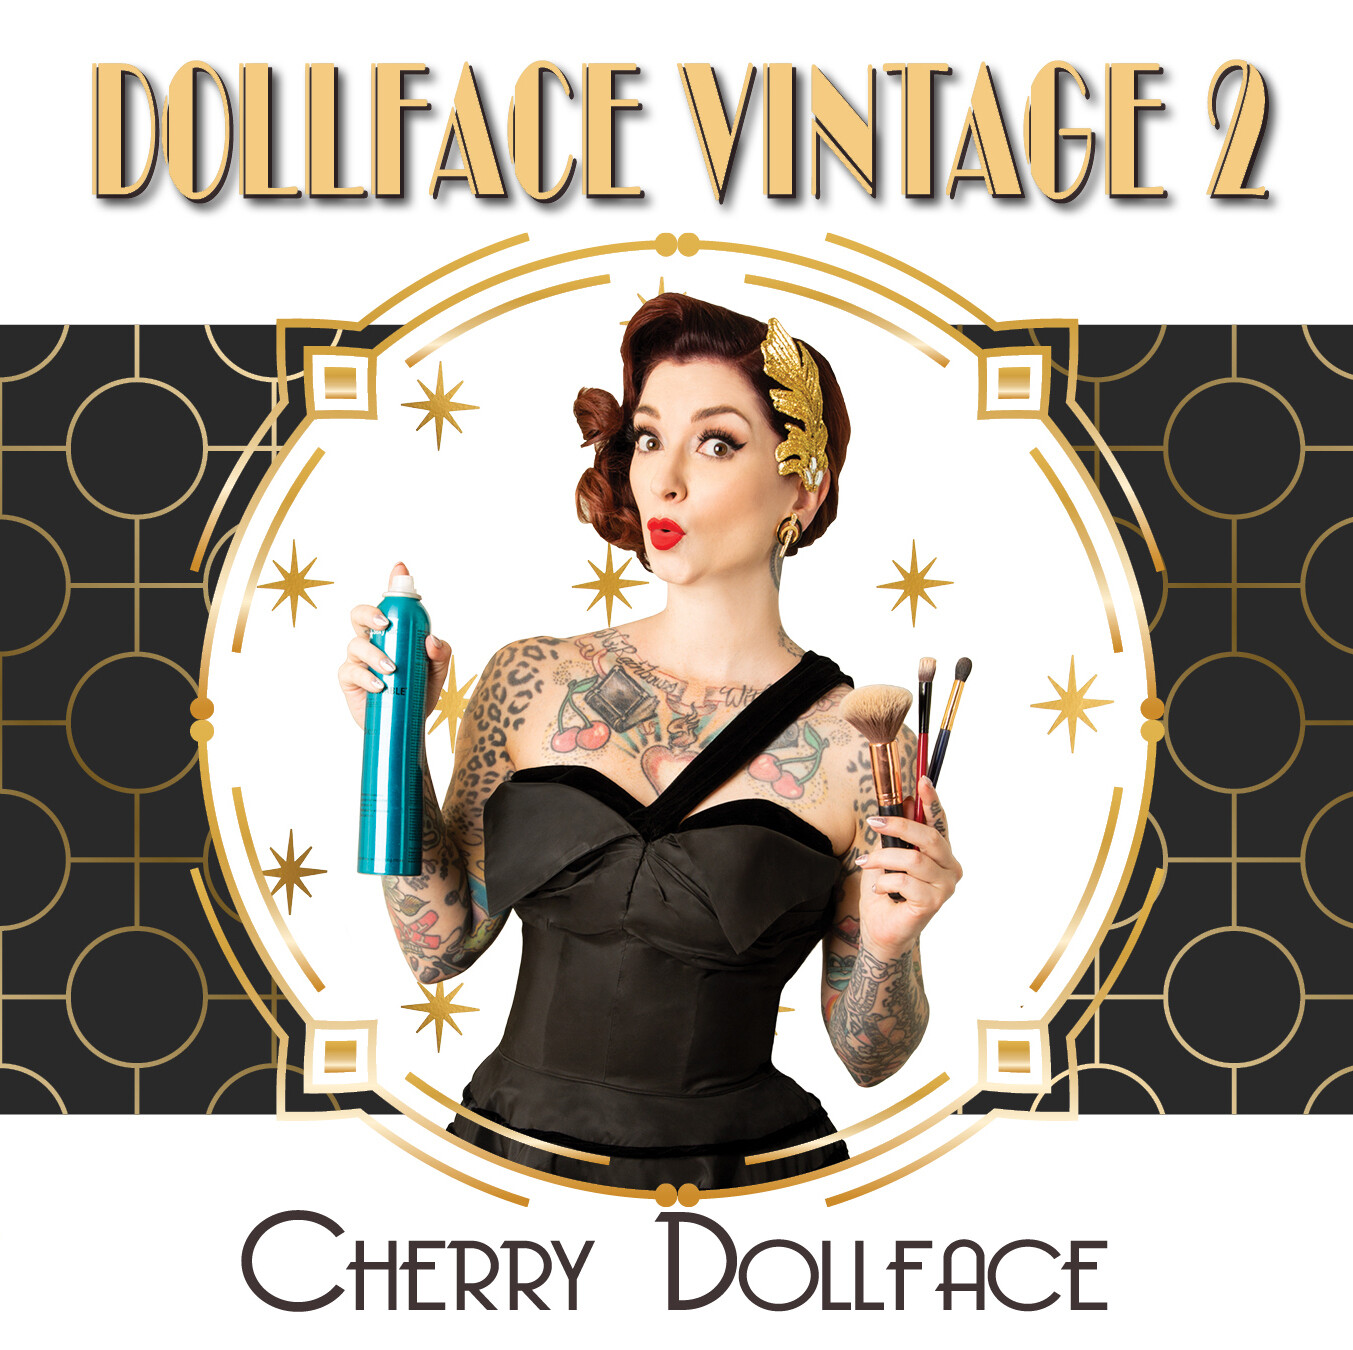 Dollface Vintage 2 by Cherry Dollface